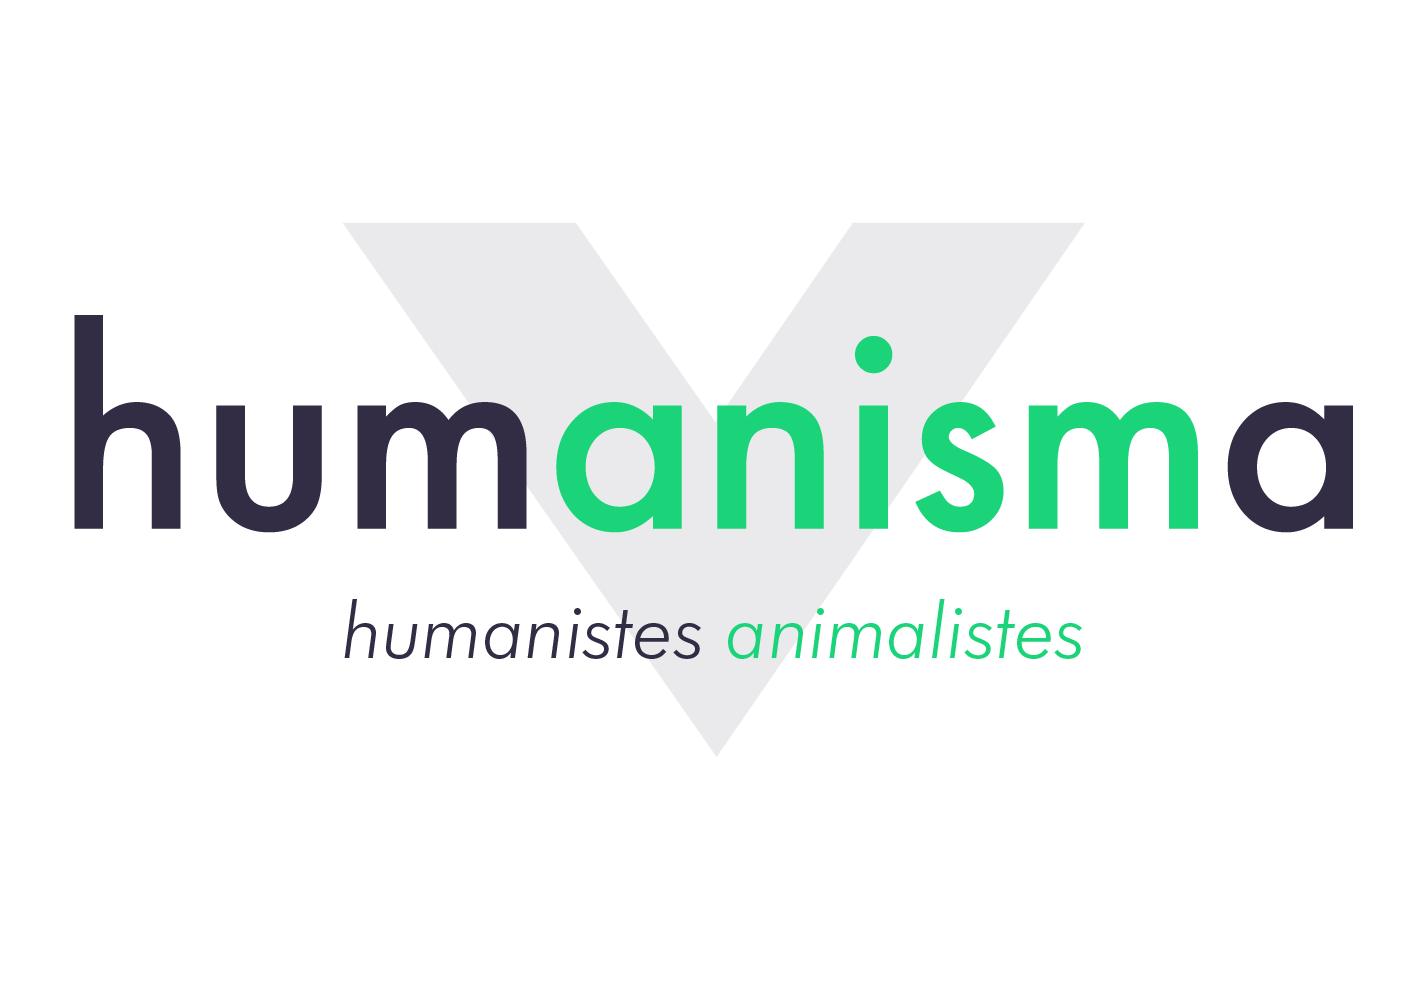 Humanisma